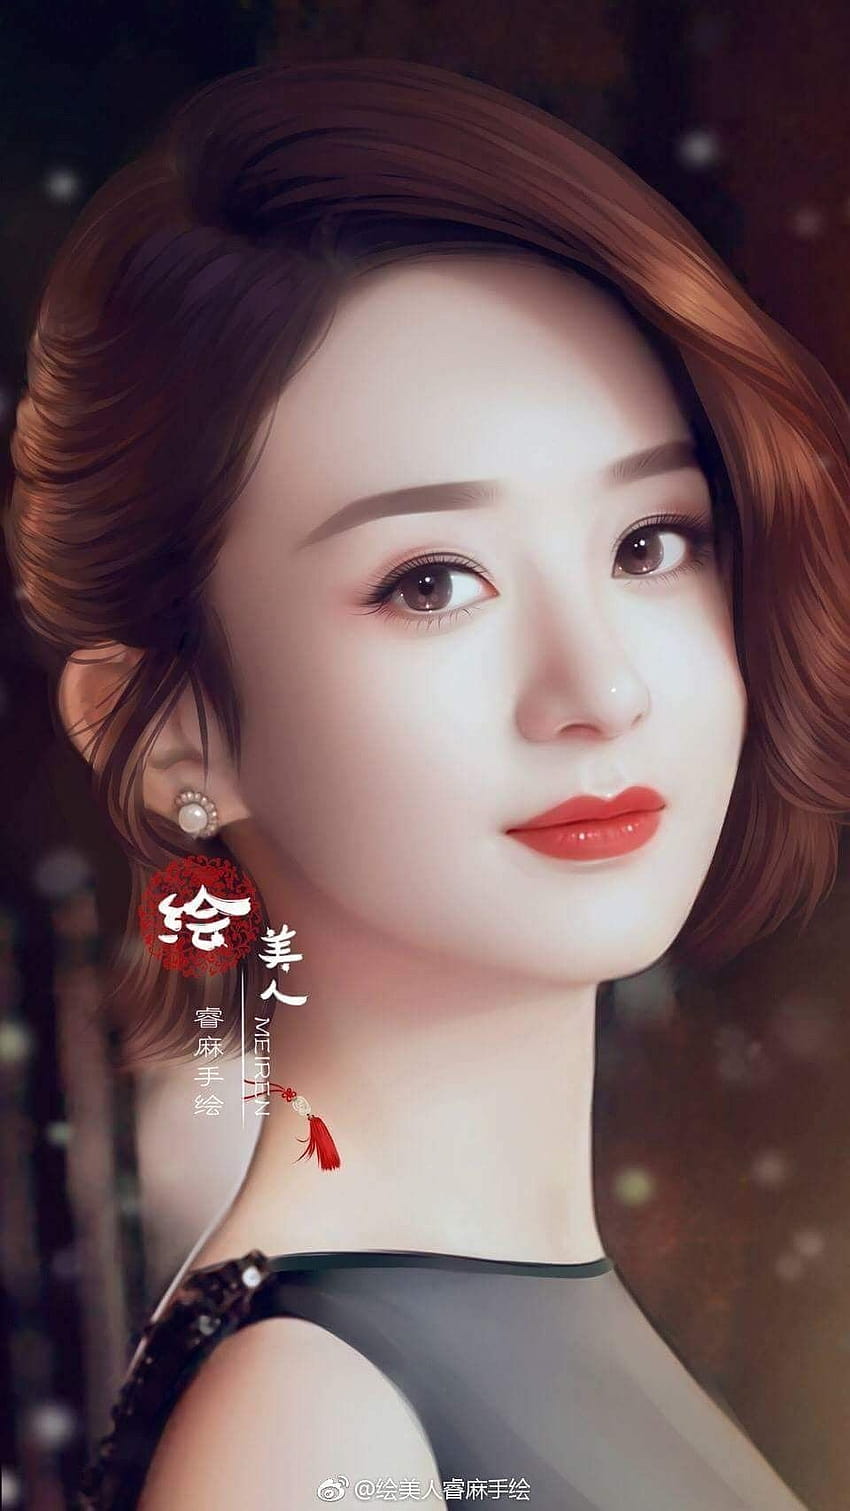 Low Chiah Kia on 赵丽颖, stylish chinese cute girl HD phone wallpaper